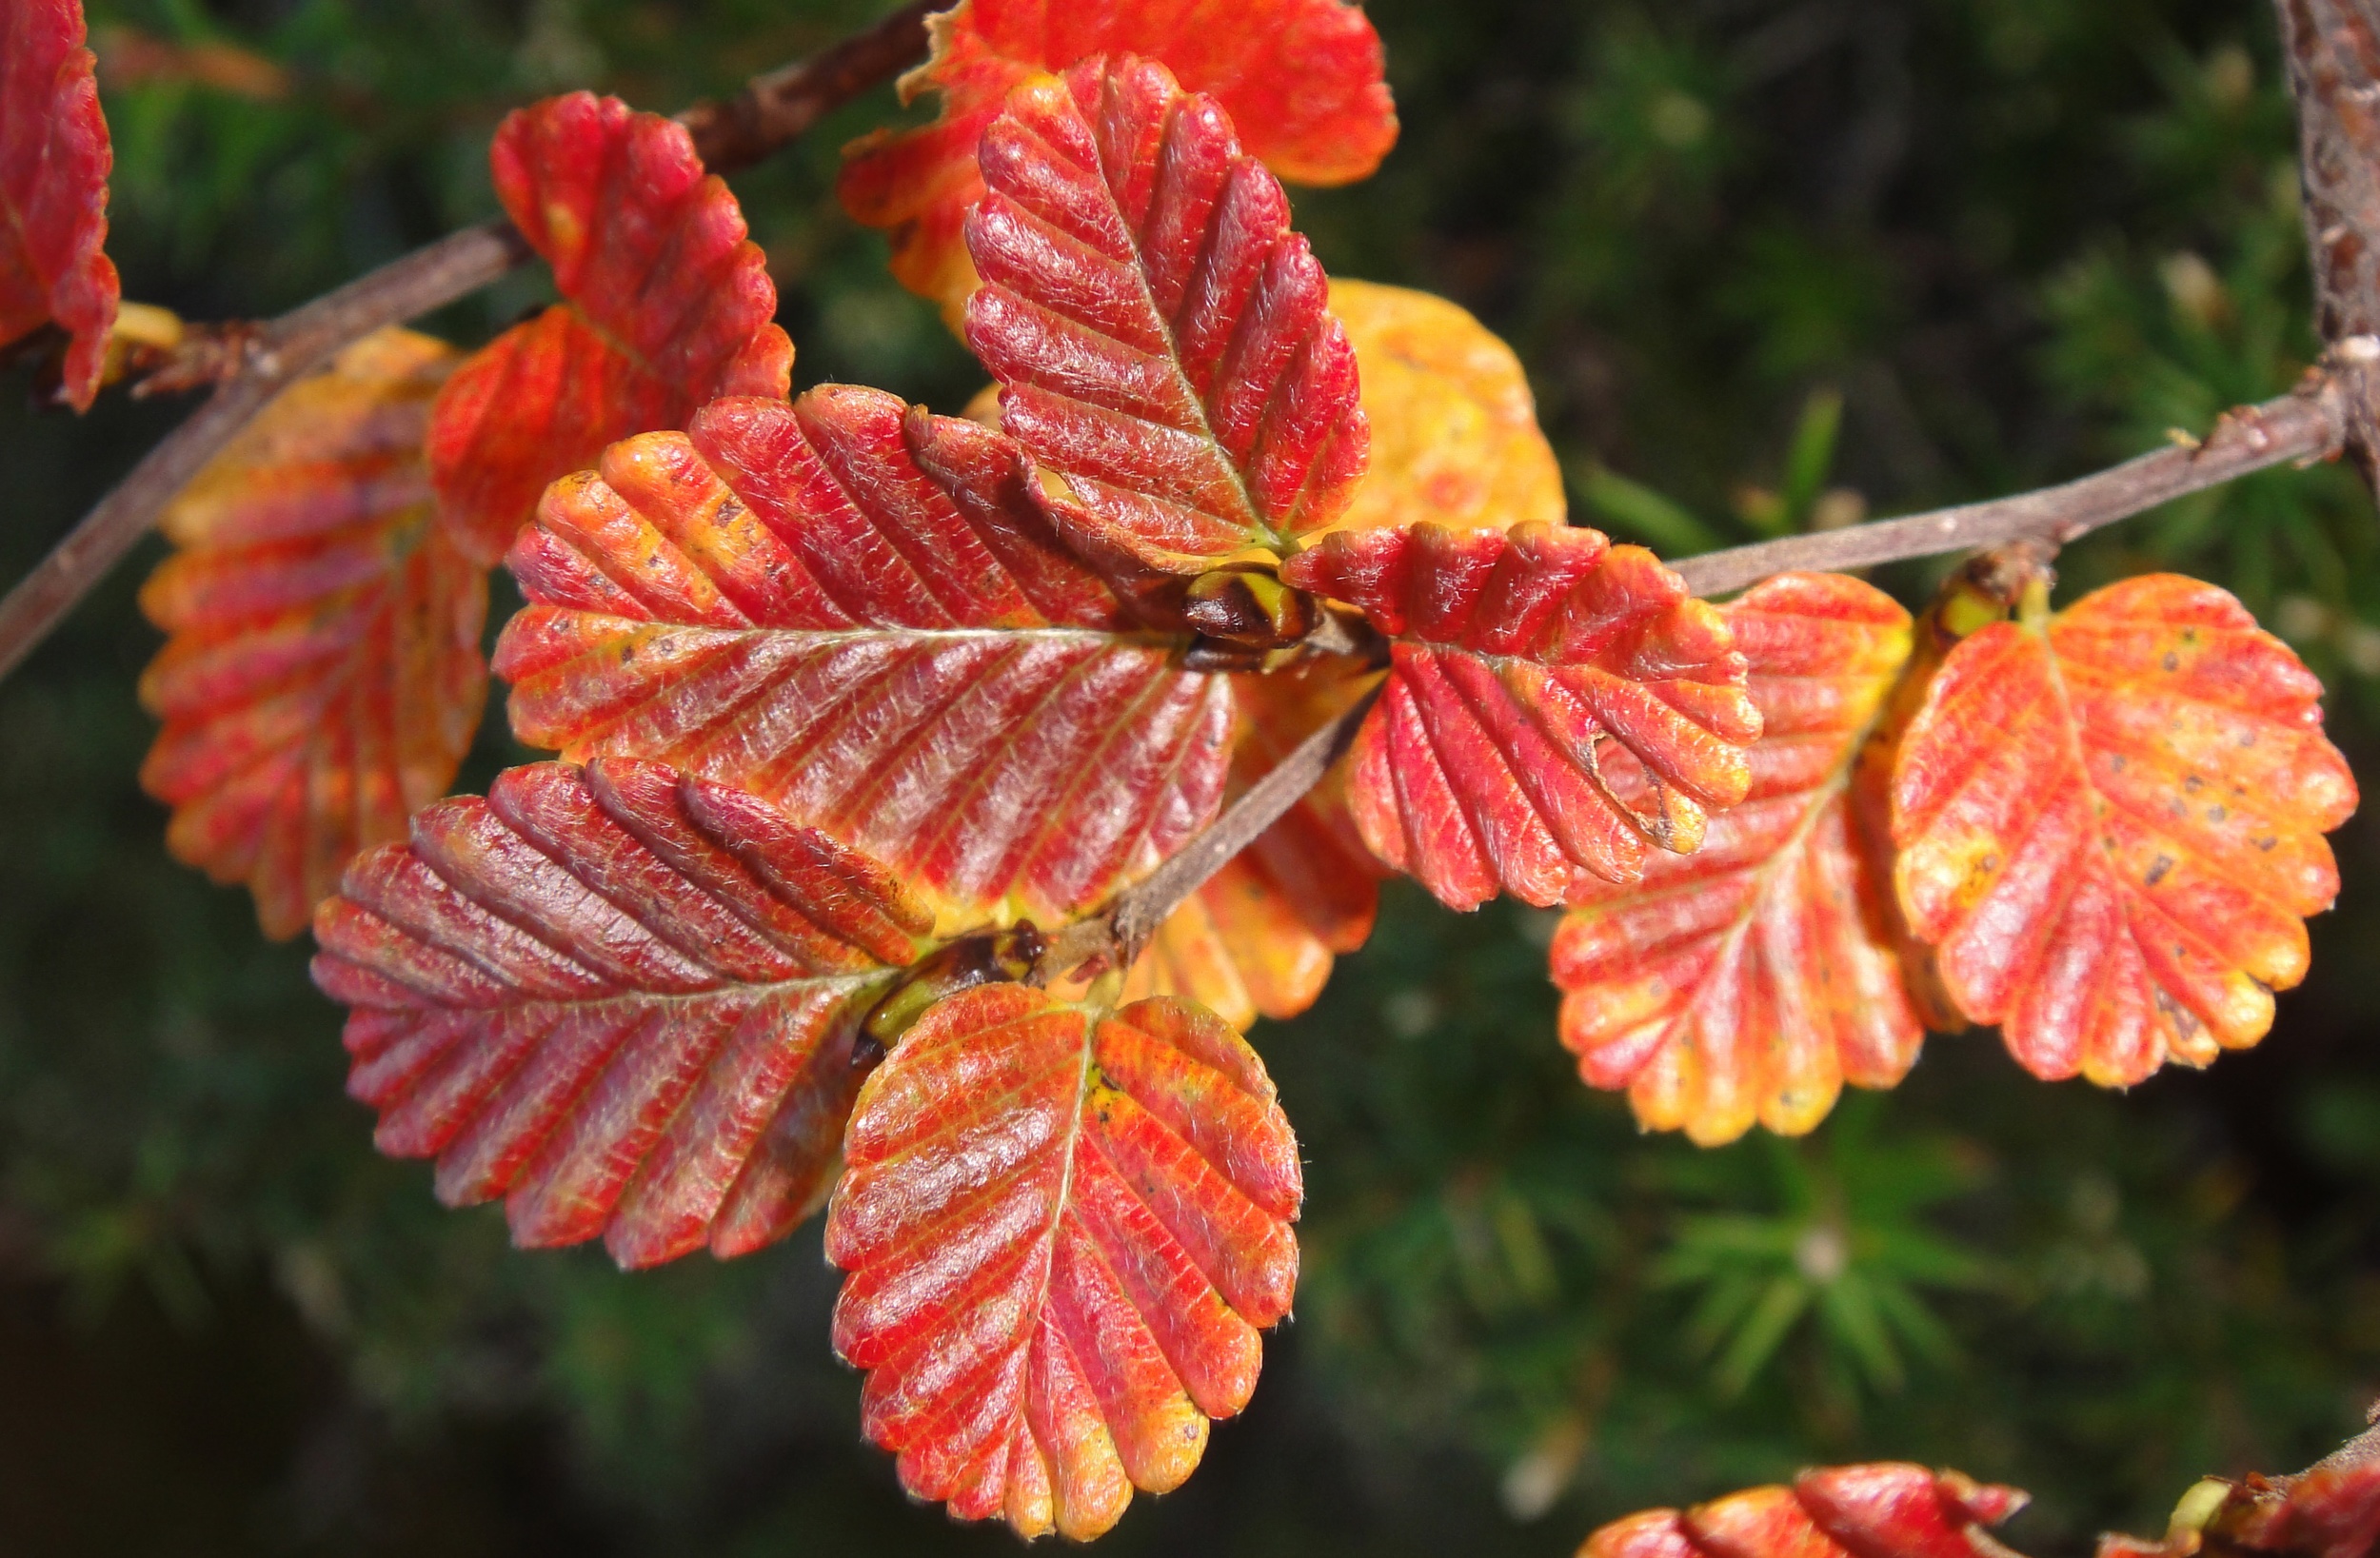  Red Notafagus gunni leaves, Lake Fenton 